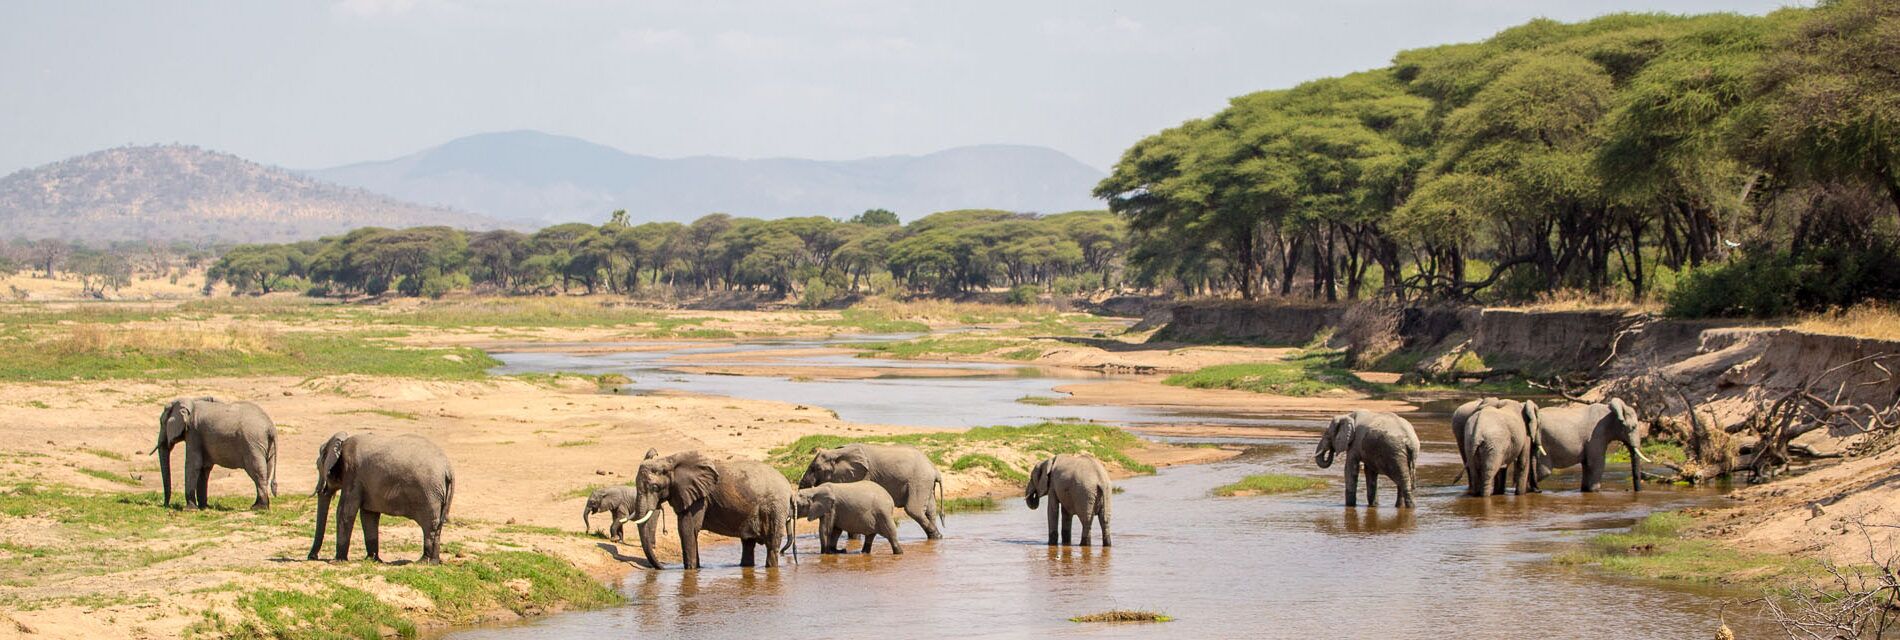 Elefantenherde im Fluss, hohe grüne Bäume und trockene Wiesen